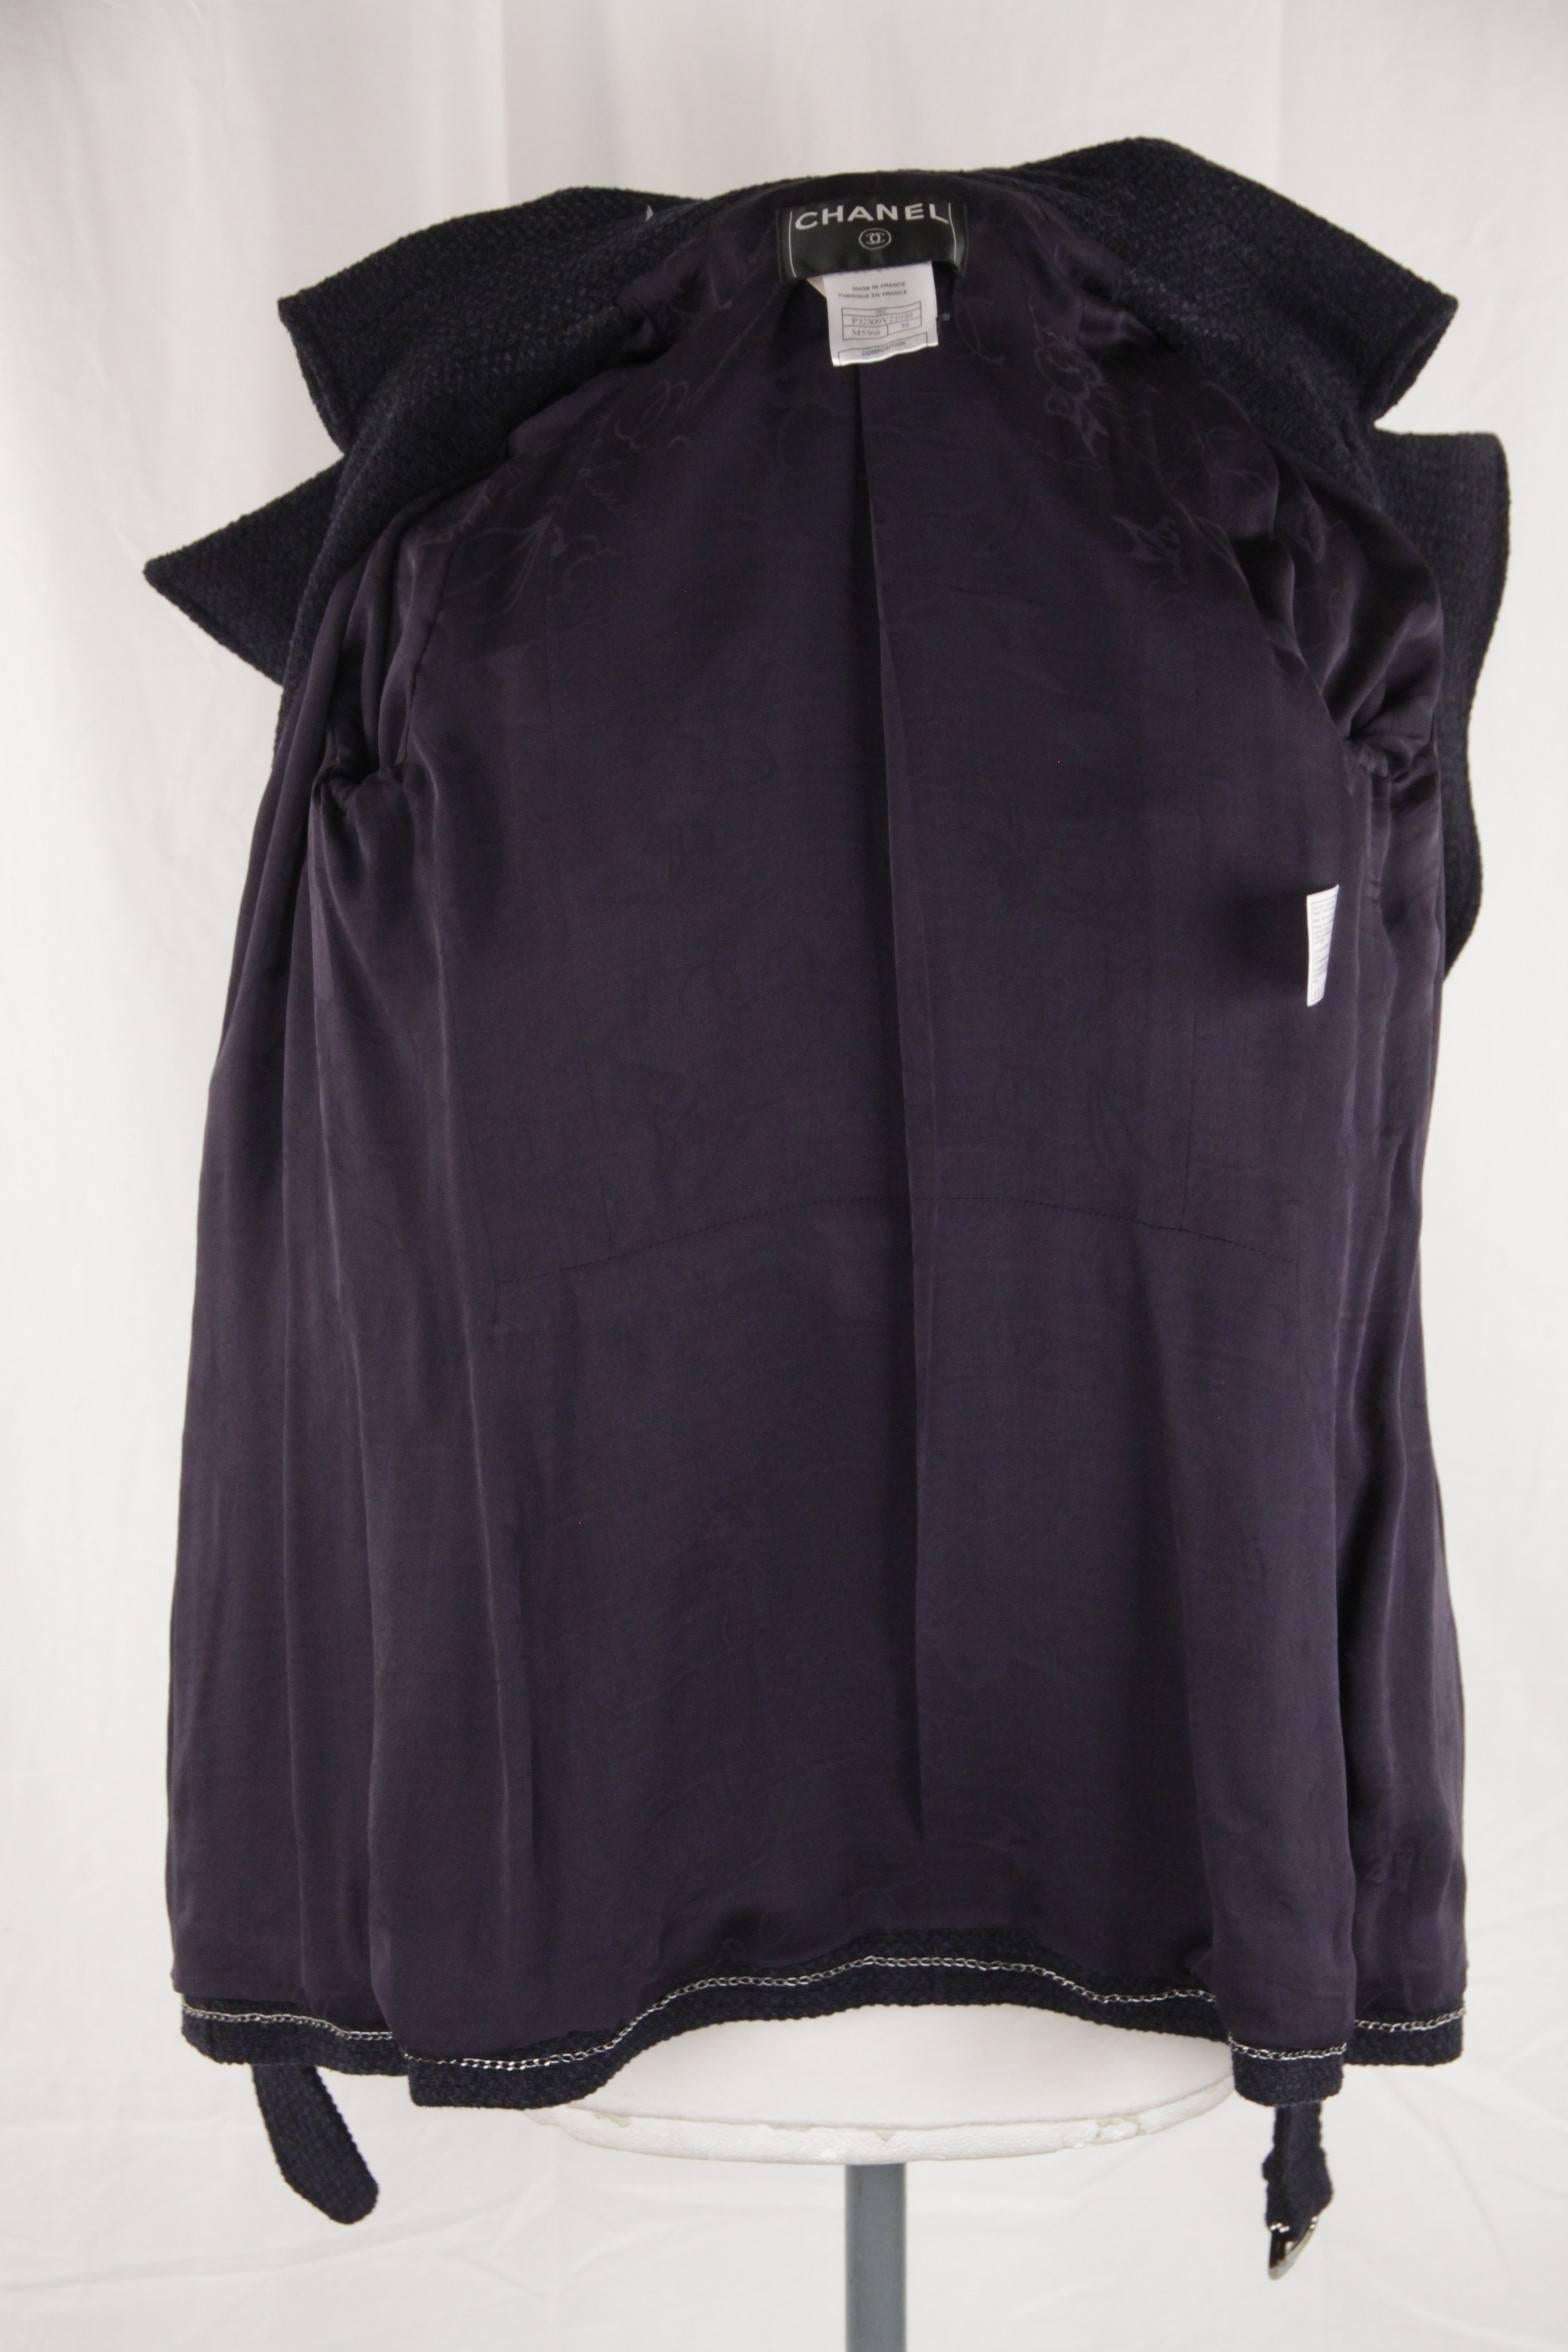 CHANEL Blue Cotton & Wool DOUBLE BREASTED JACKET Coat w/ BELT Size 38 2